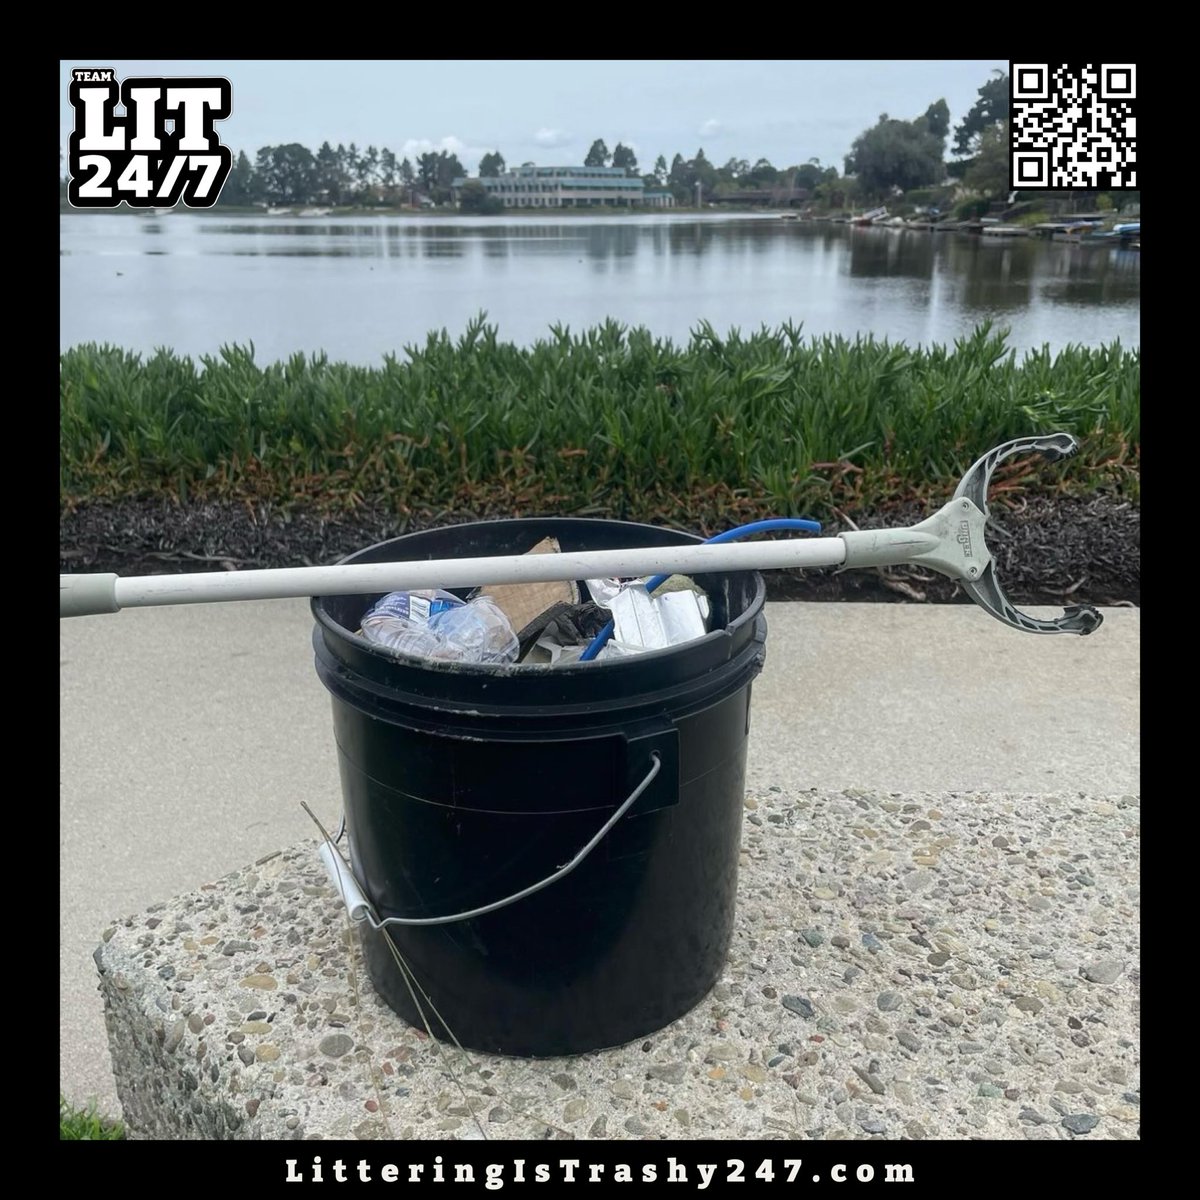 Plalking by the lagoon!
🐟🐠💧🚯

#LitteringIsTrashy
#KeepingActive
#LitterCleanup 
#MentalHealth
#PlasticWaste
#StopLittering
#TeamLIT247
#LitterPicking
#Community
#Littering
#Litter